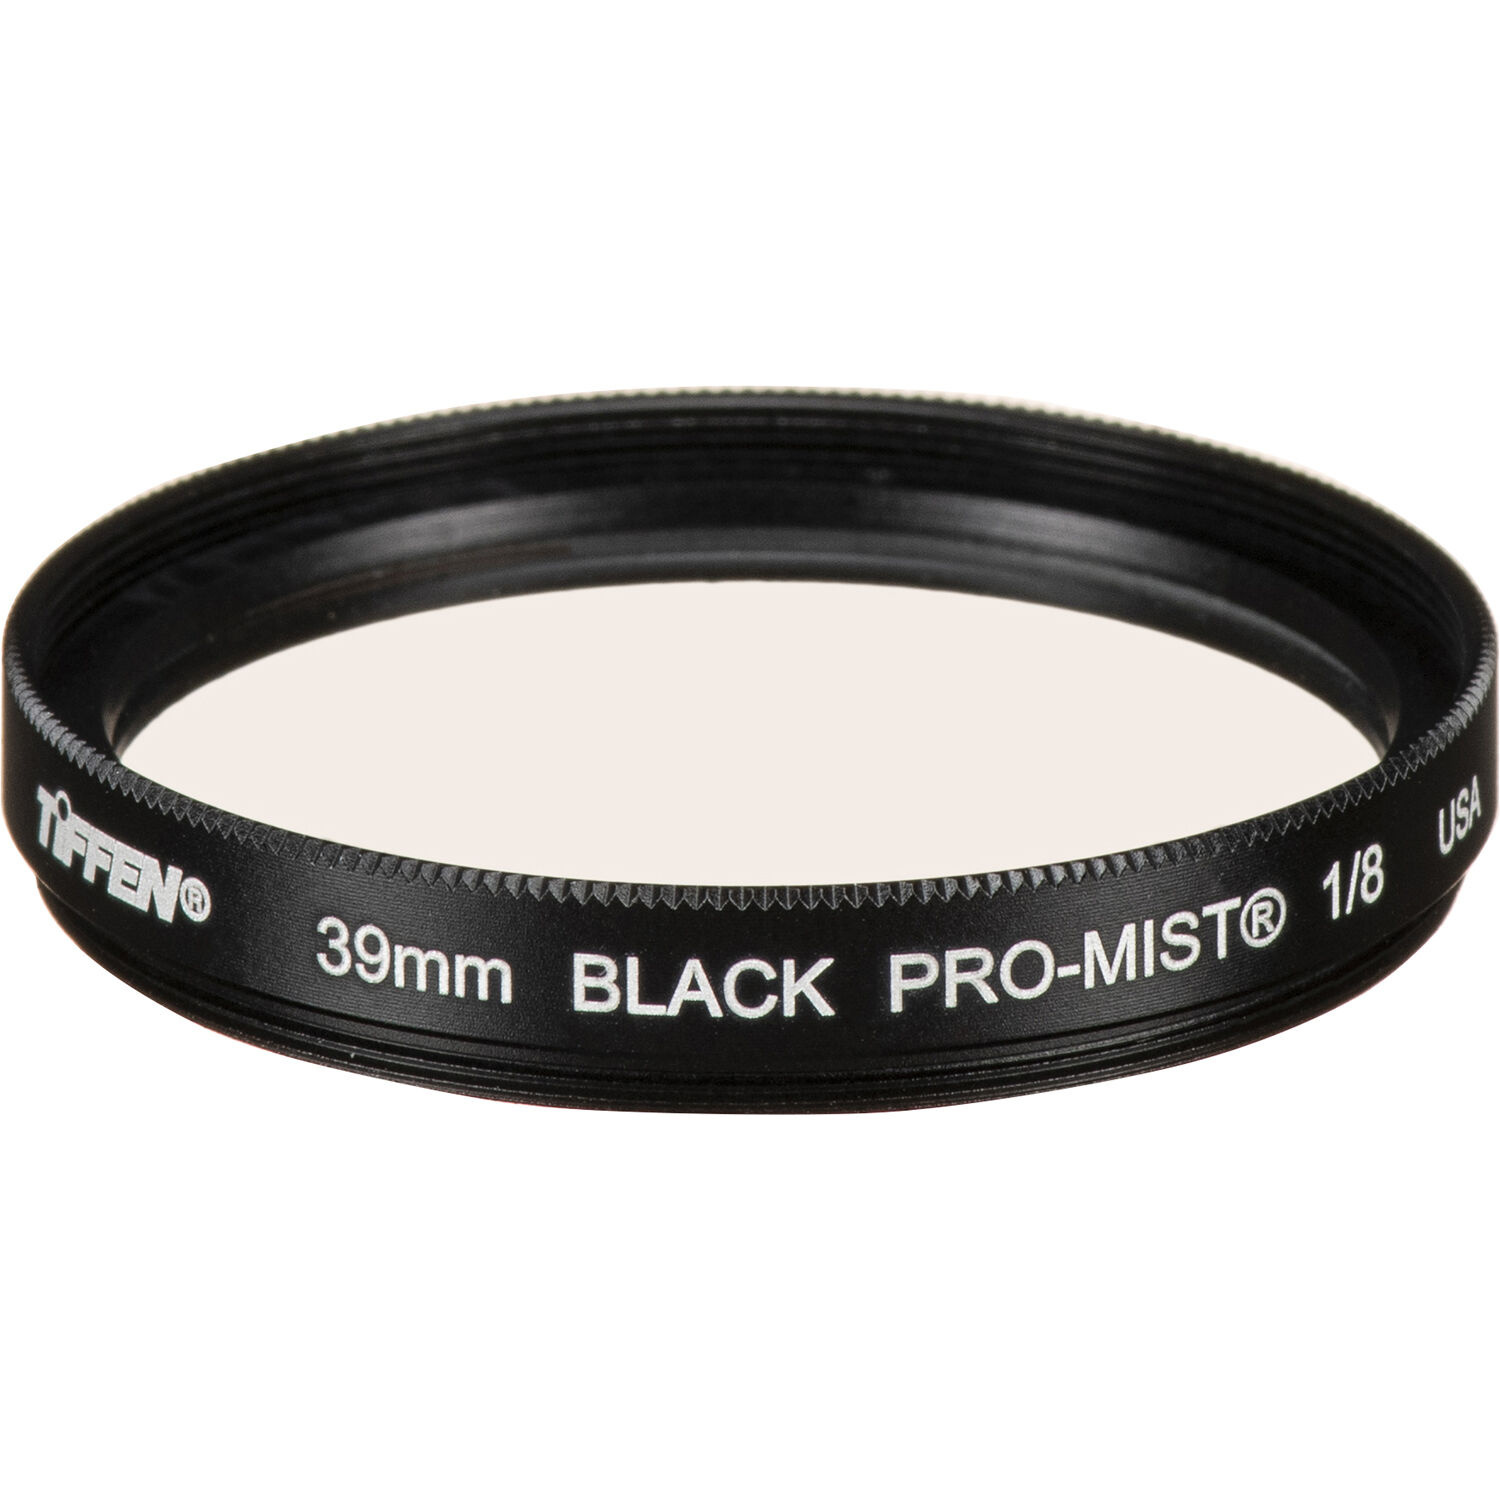 Tiffen 39mm Black Pro-Mist 1/8 Filter